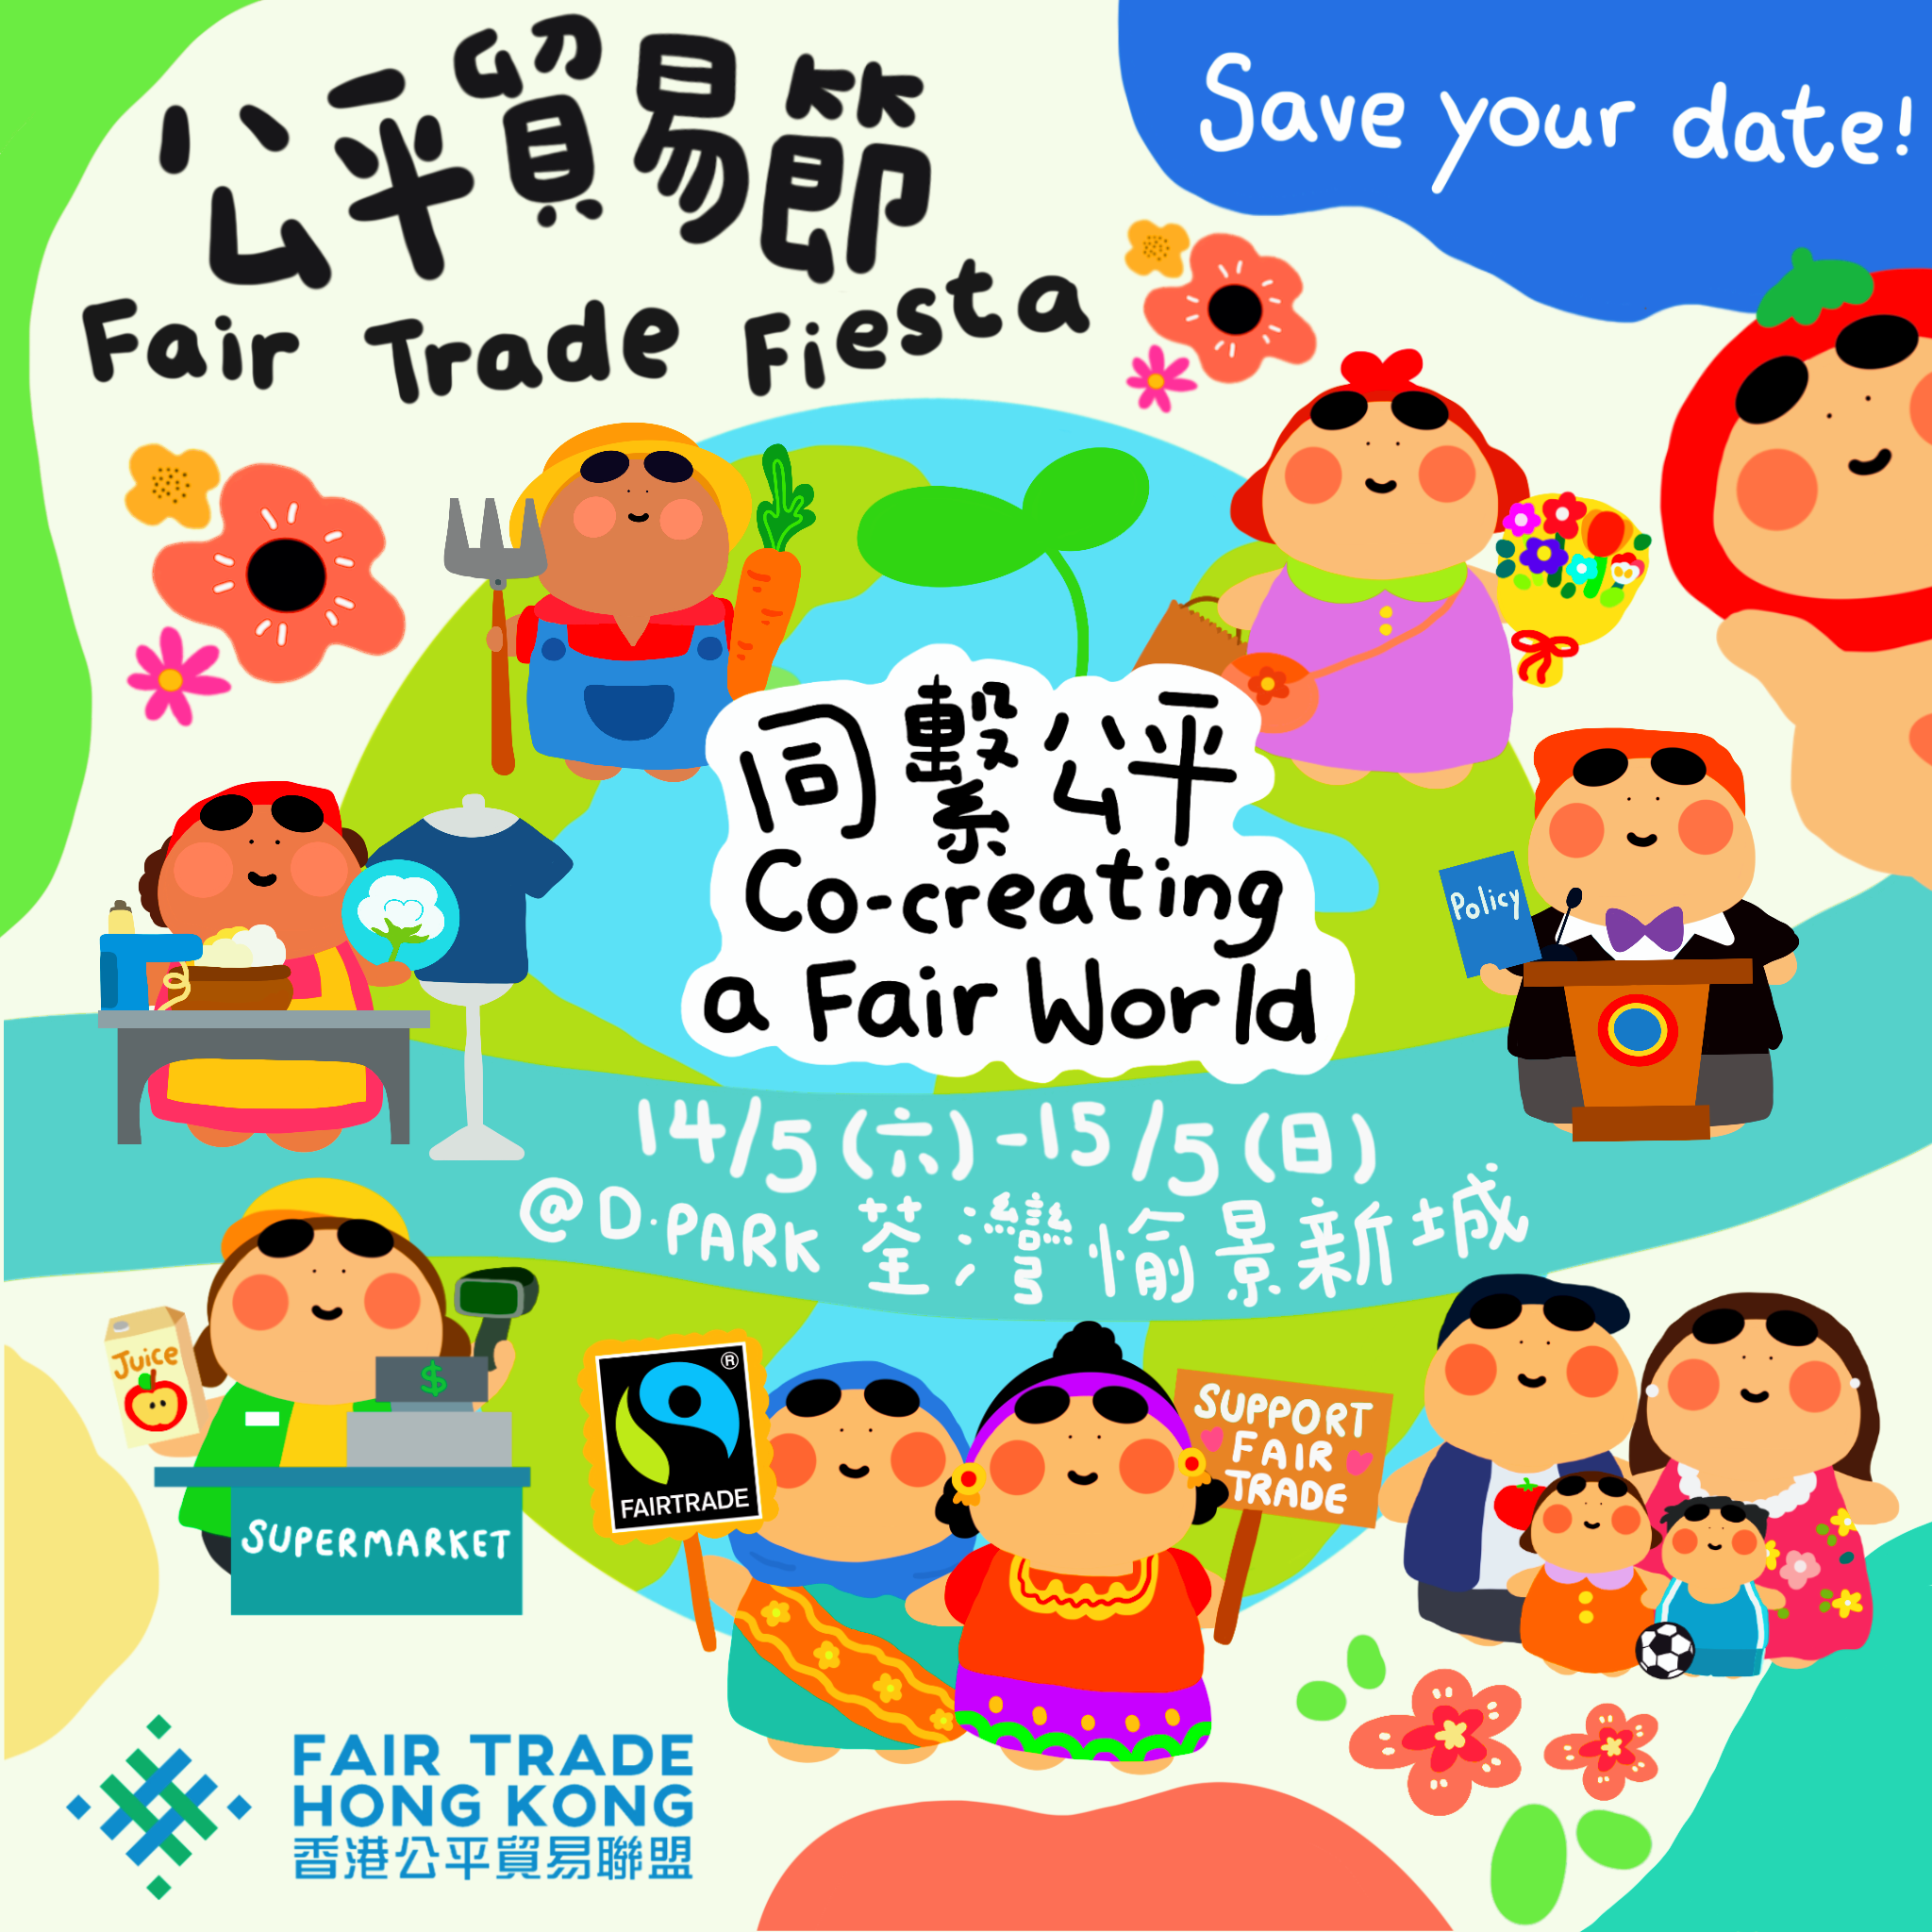 Fair Trade Fiesta is back in town!